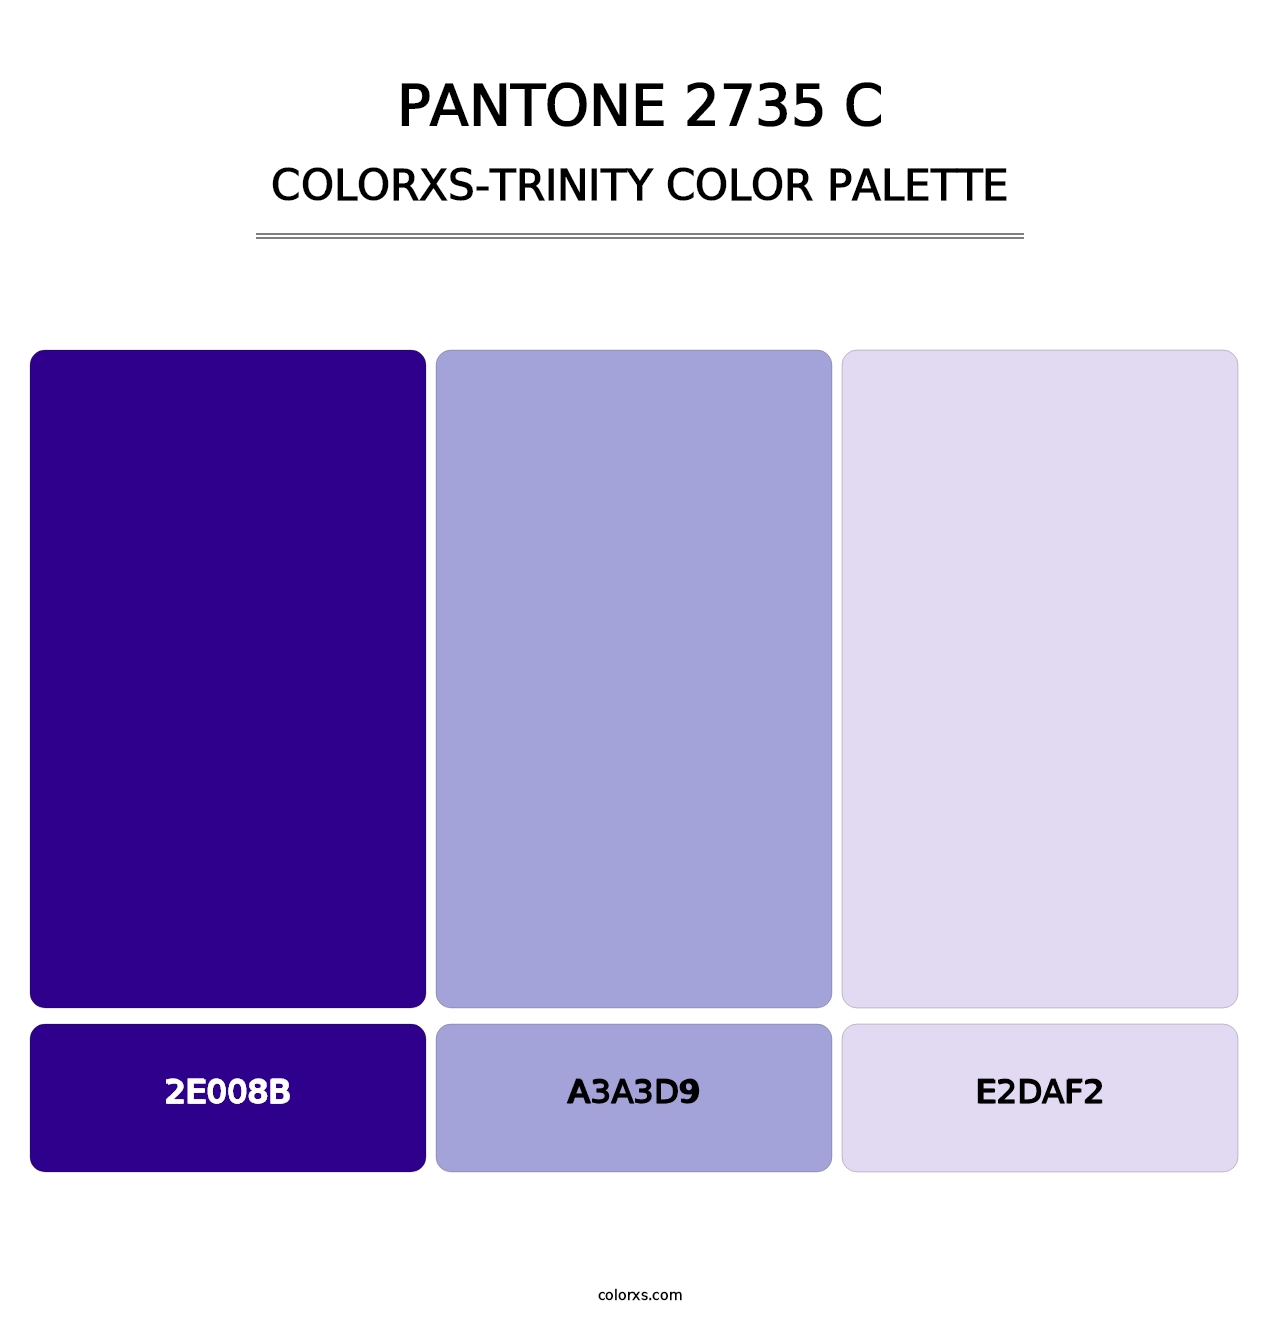 PANTONE 2735 C - Colorxs Trinity Palette